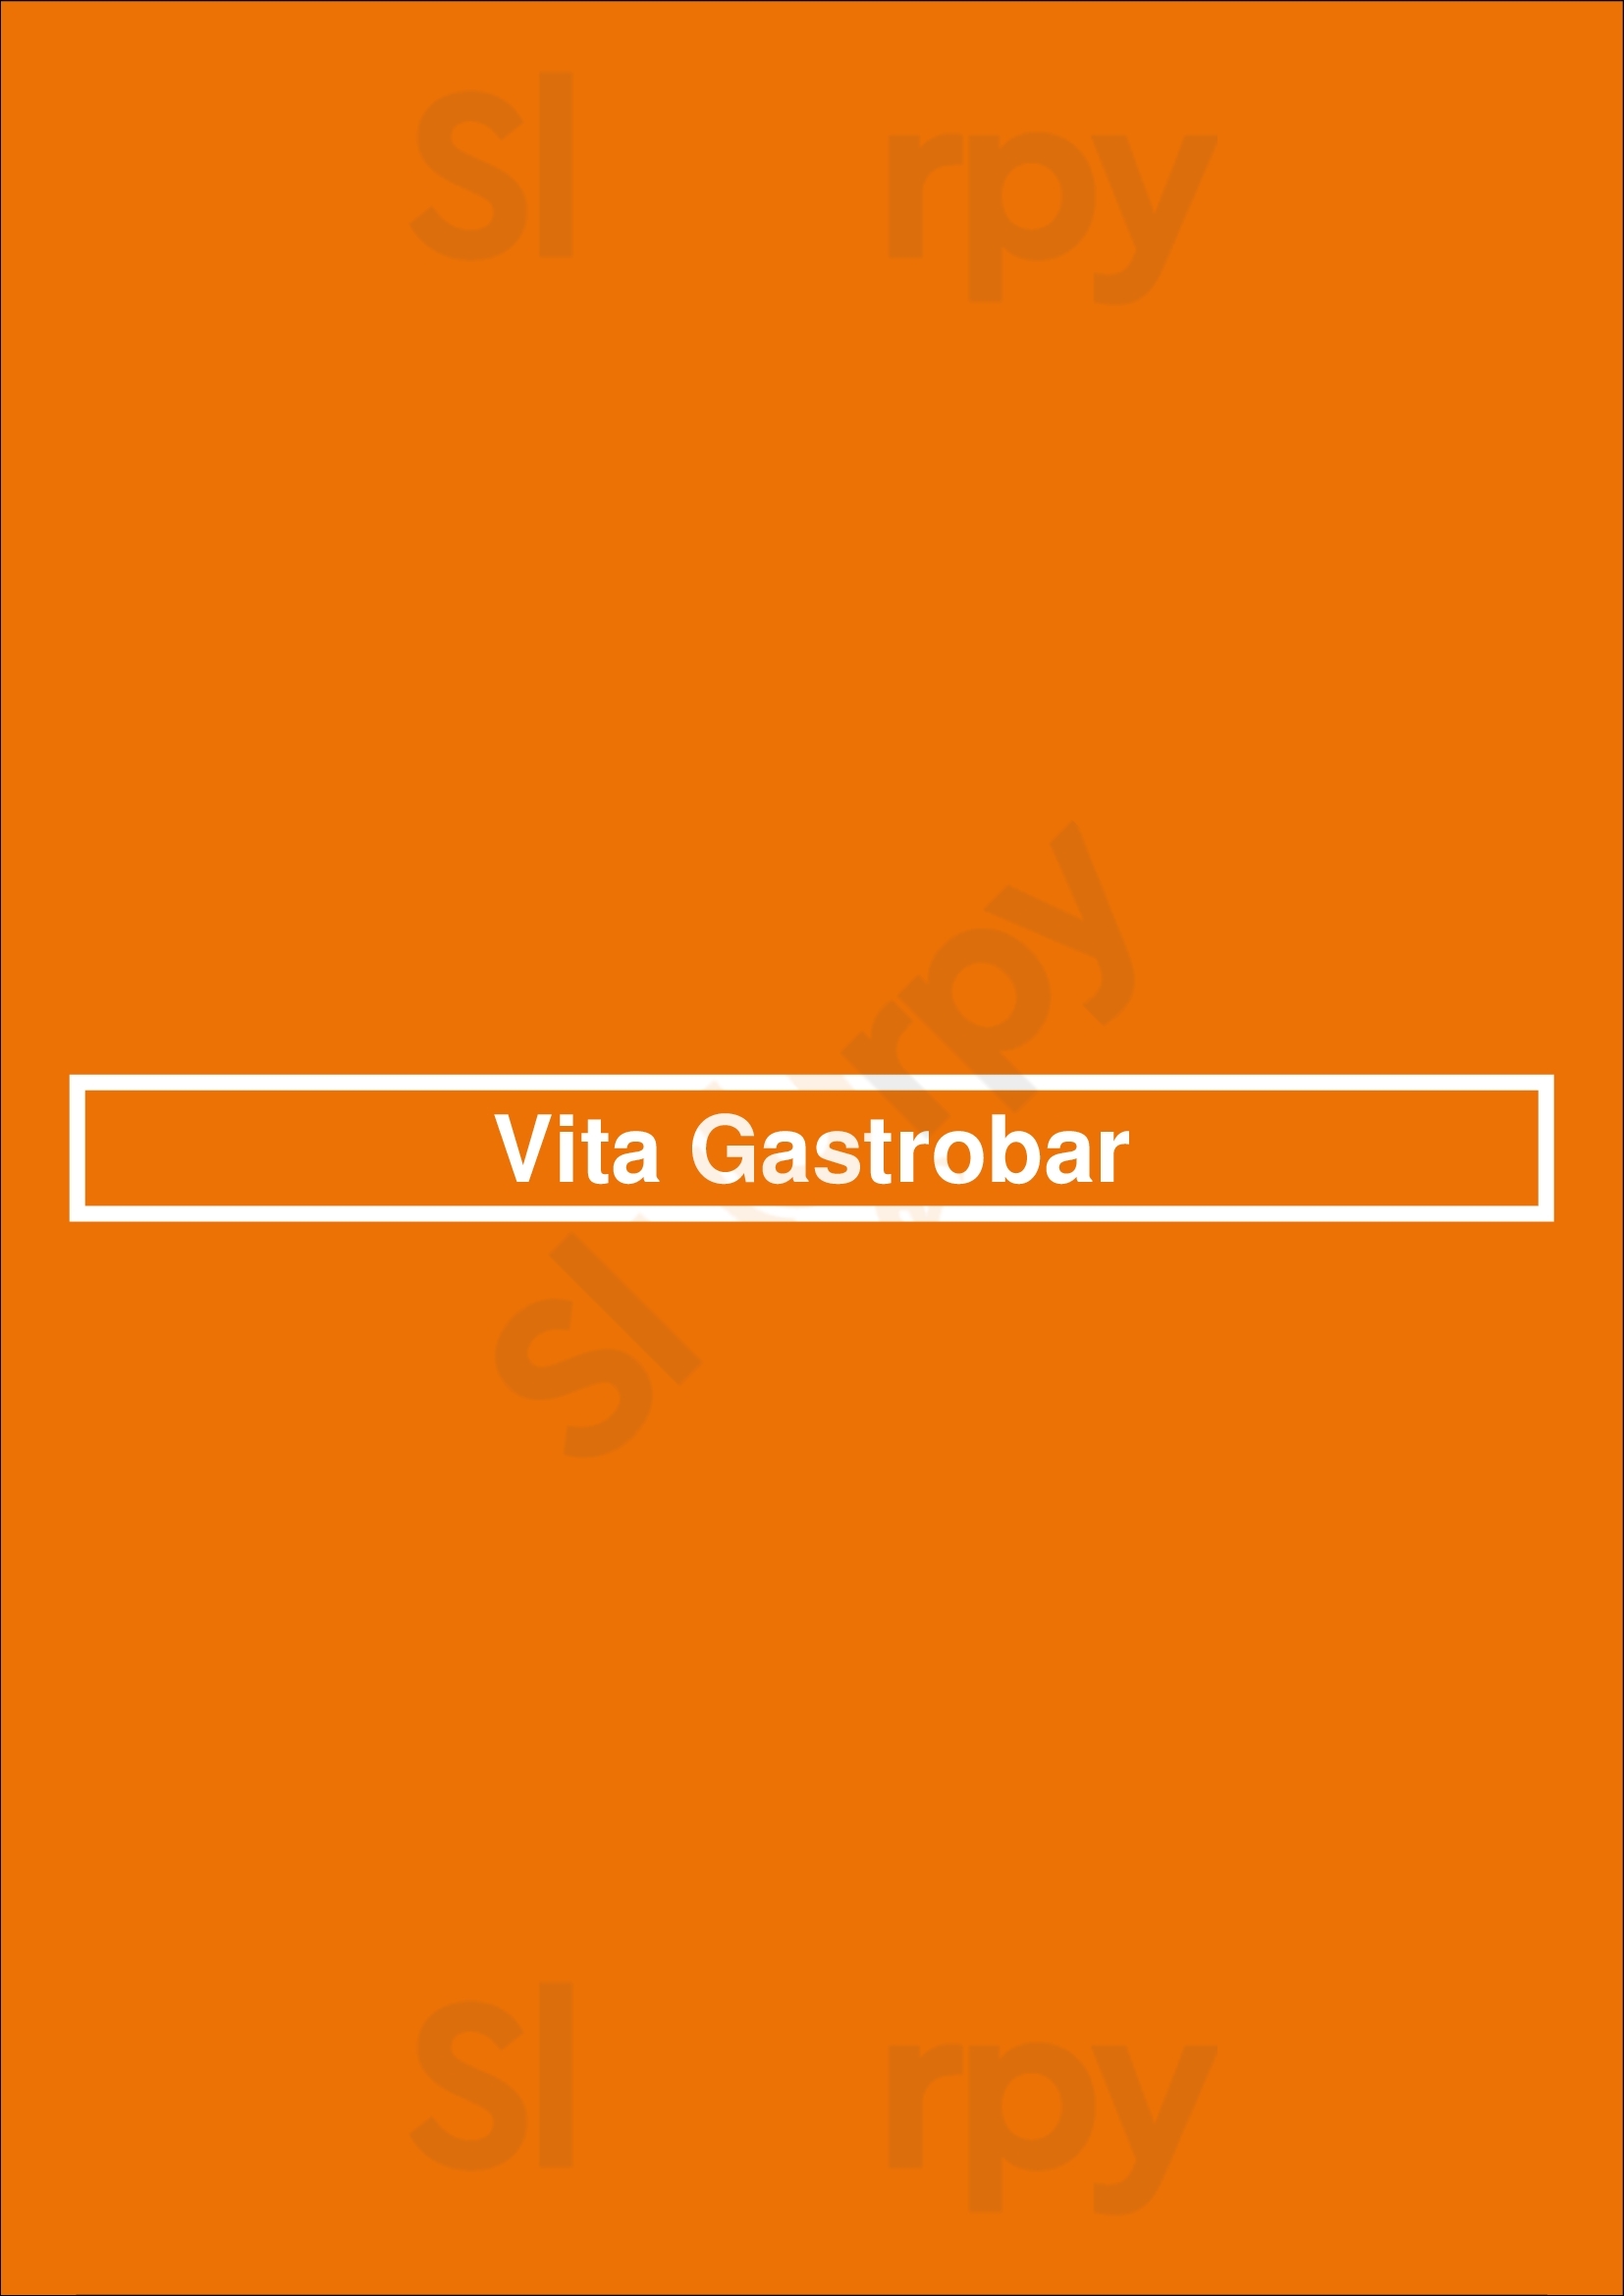 Vita Gastrobar Barcelona Menu - 1